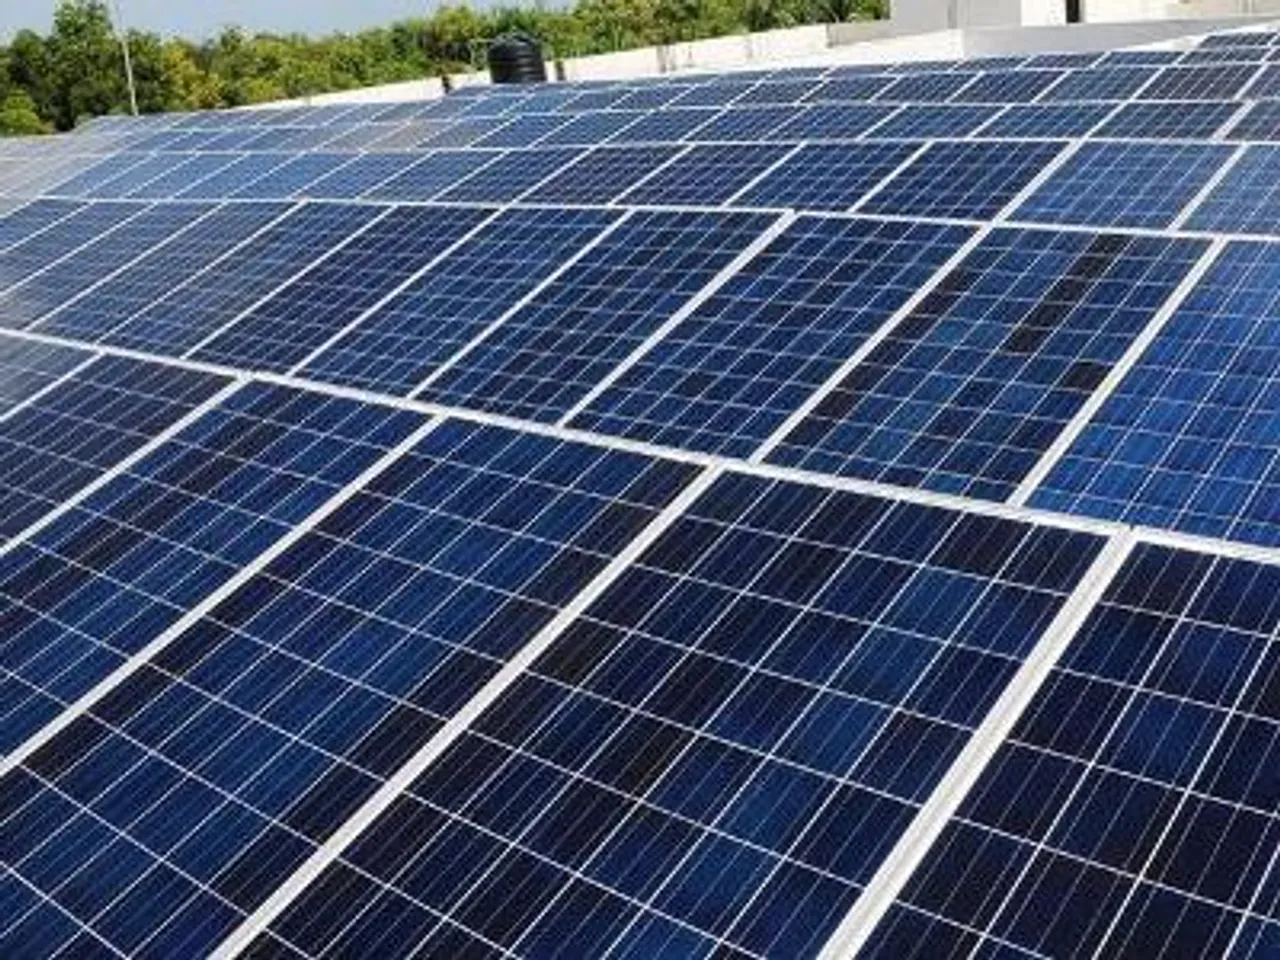 Gujarat to Kick-Start Solar Rooftop Project